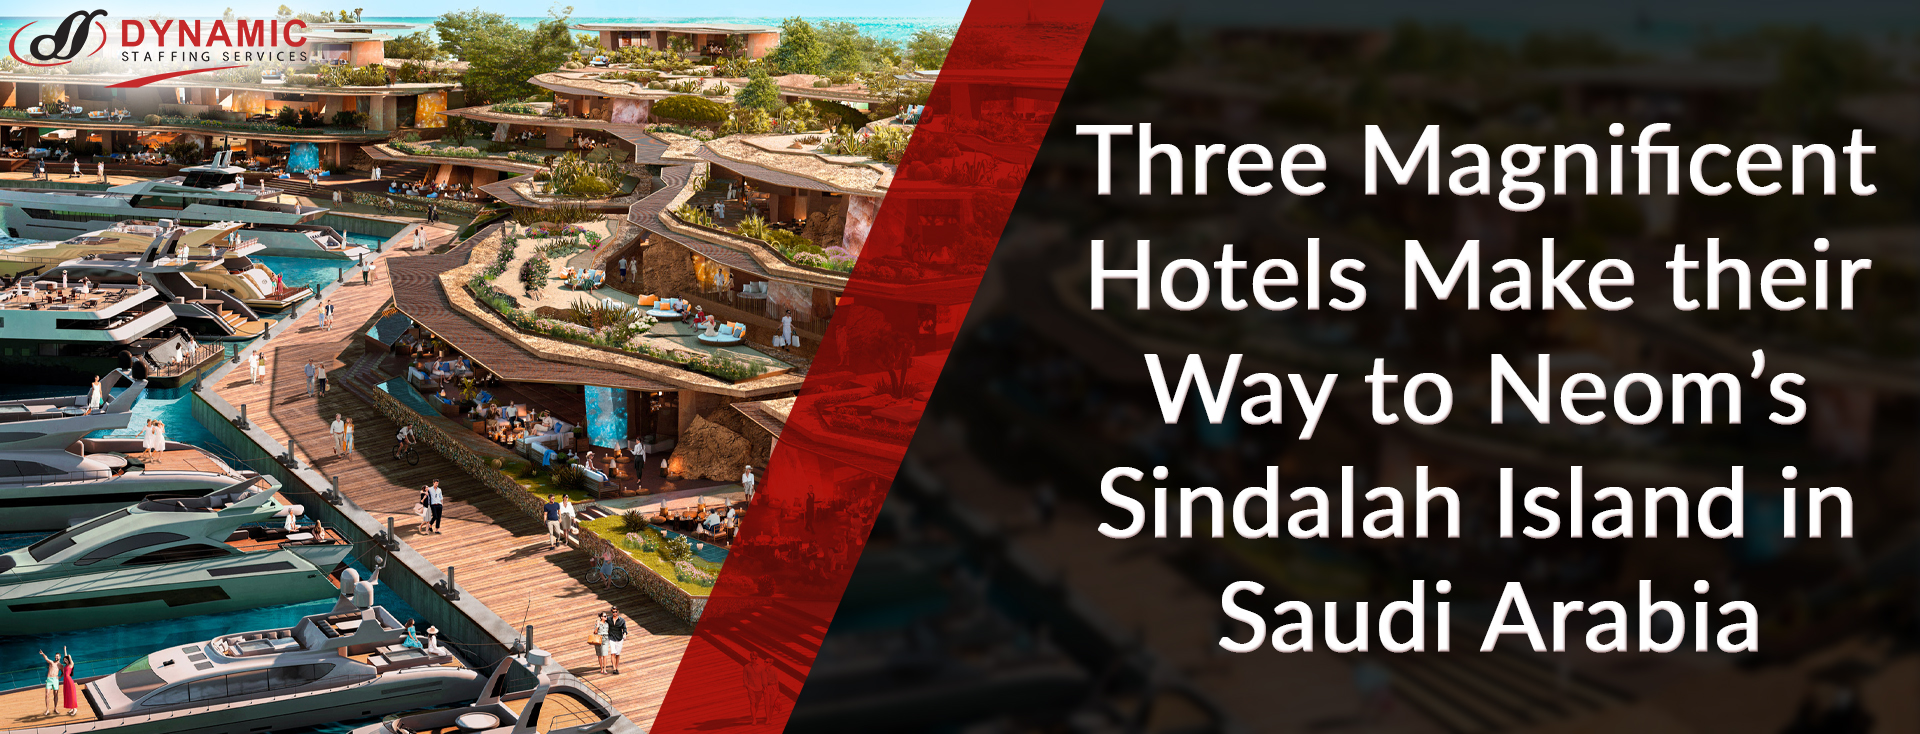 Three Magnificent Hotels Make their Way to Neom’s Sindalah Island in Saudi Arabia